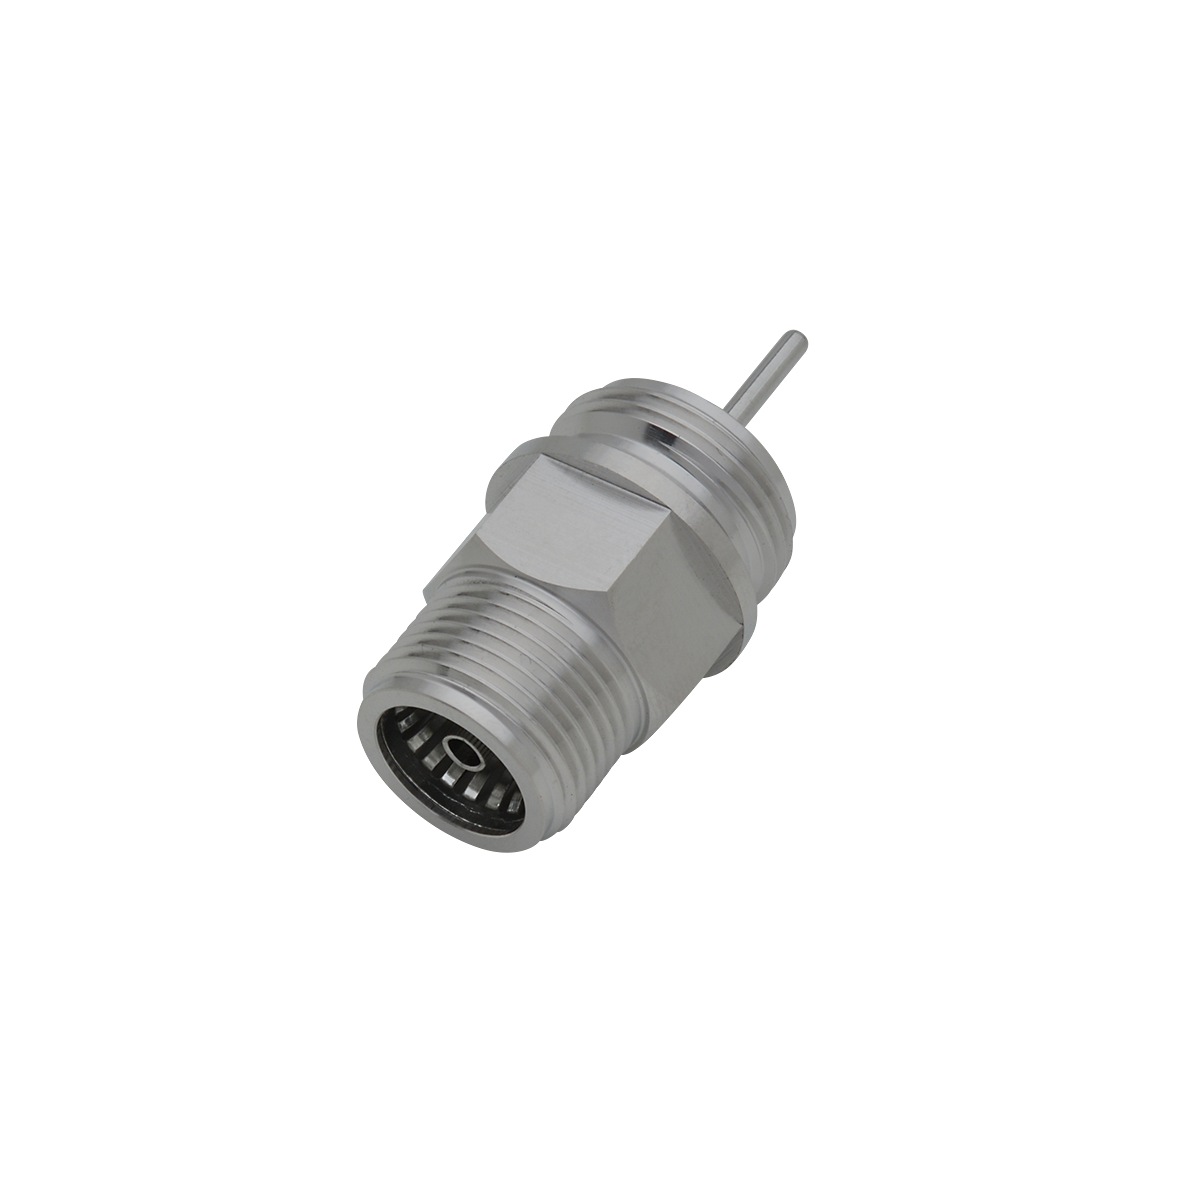 Adapter 5/8 male - IEC 14 female  12mm pin